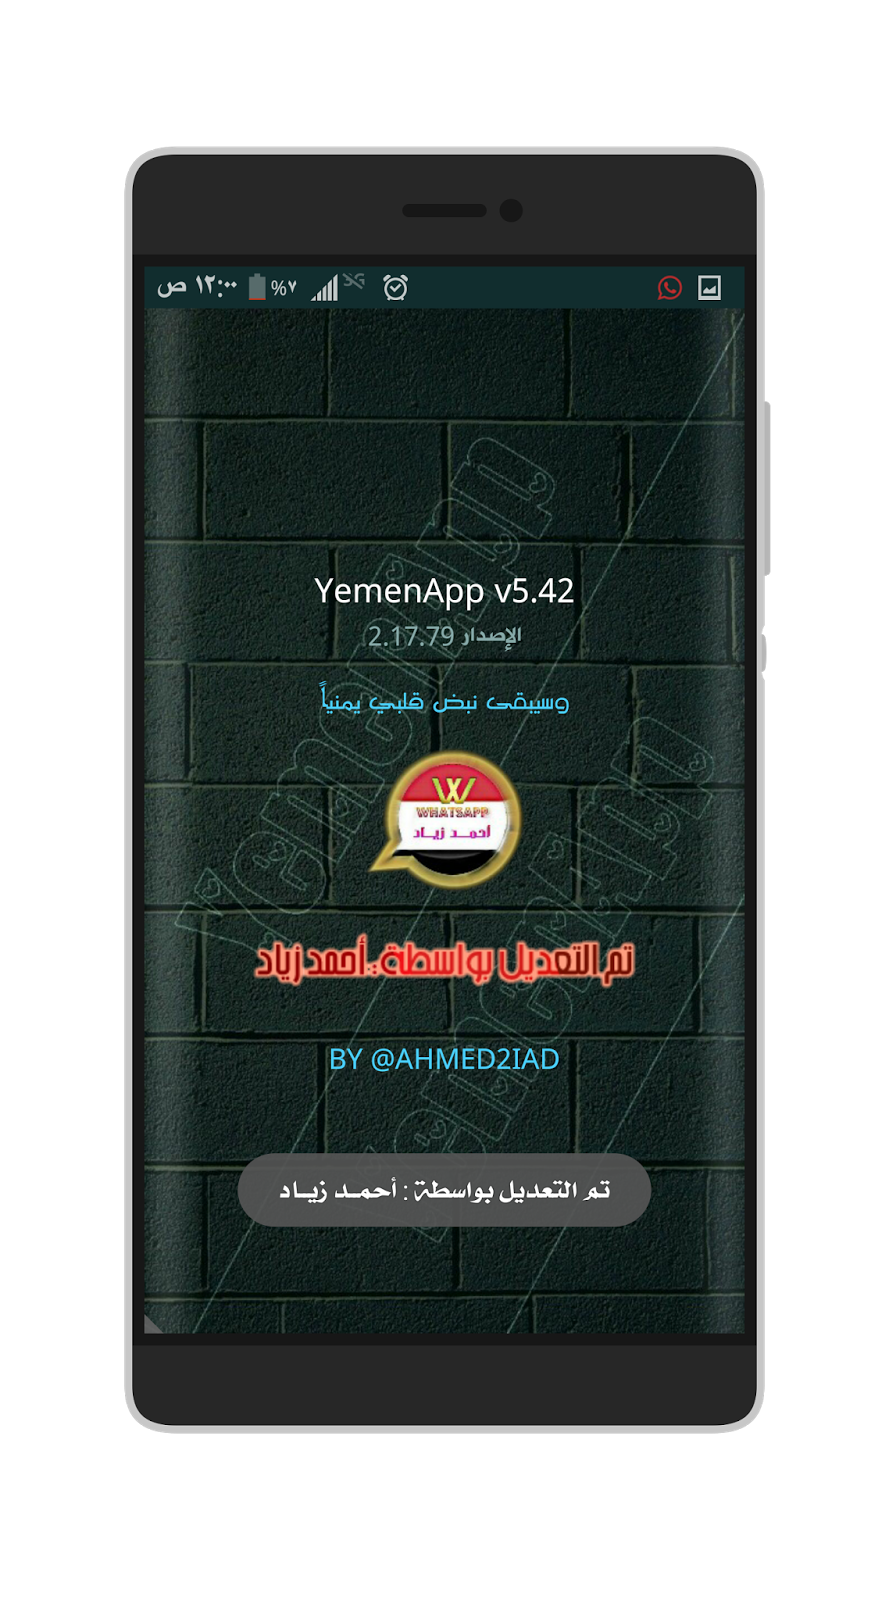  Whatsapp  Yemen v5 42 apk 